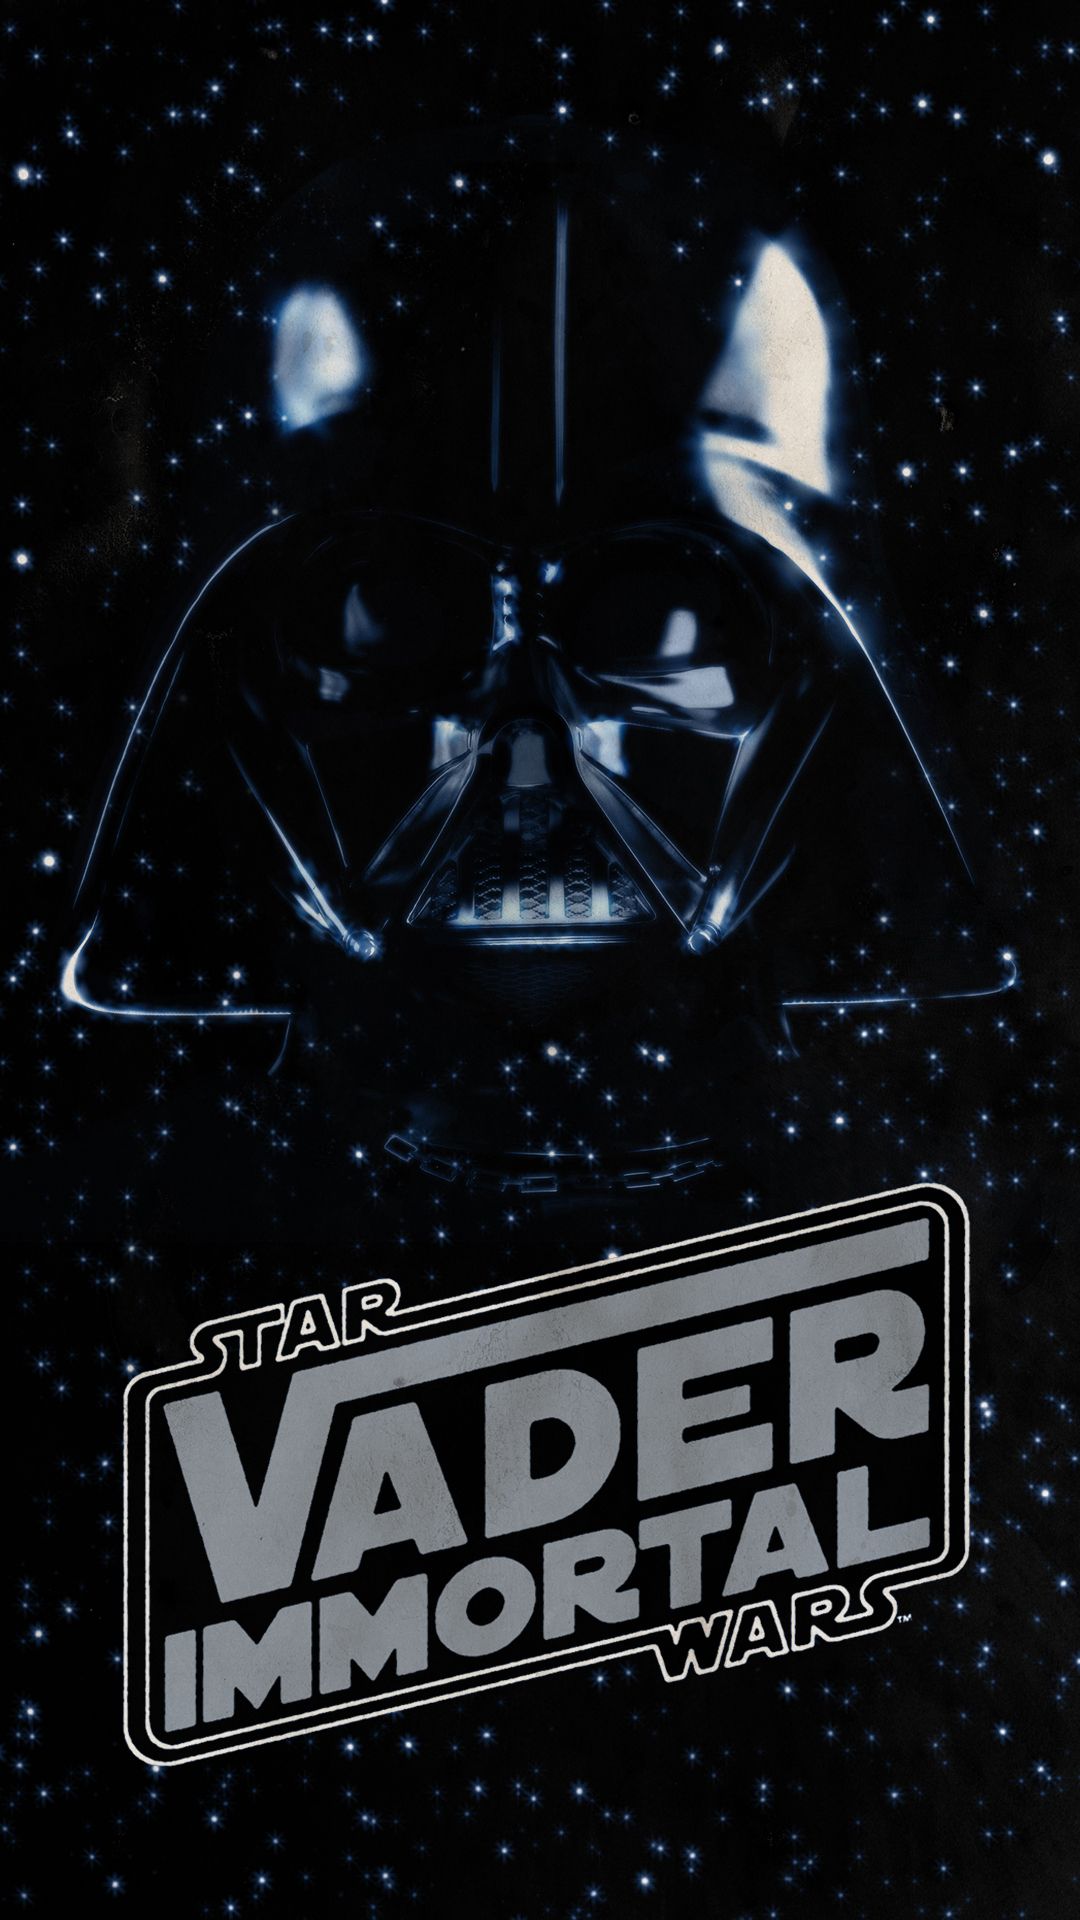 Happy Anniversary, Empire Strikes Back & Vader Immortal: Episode I!